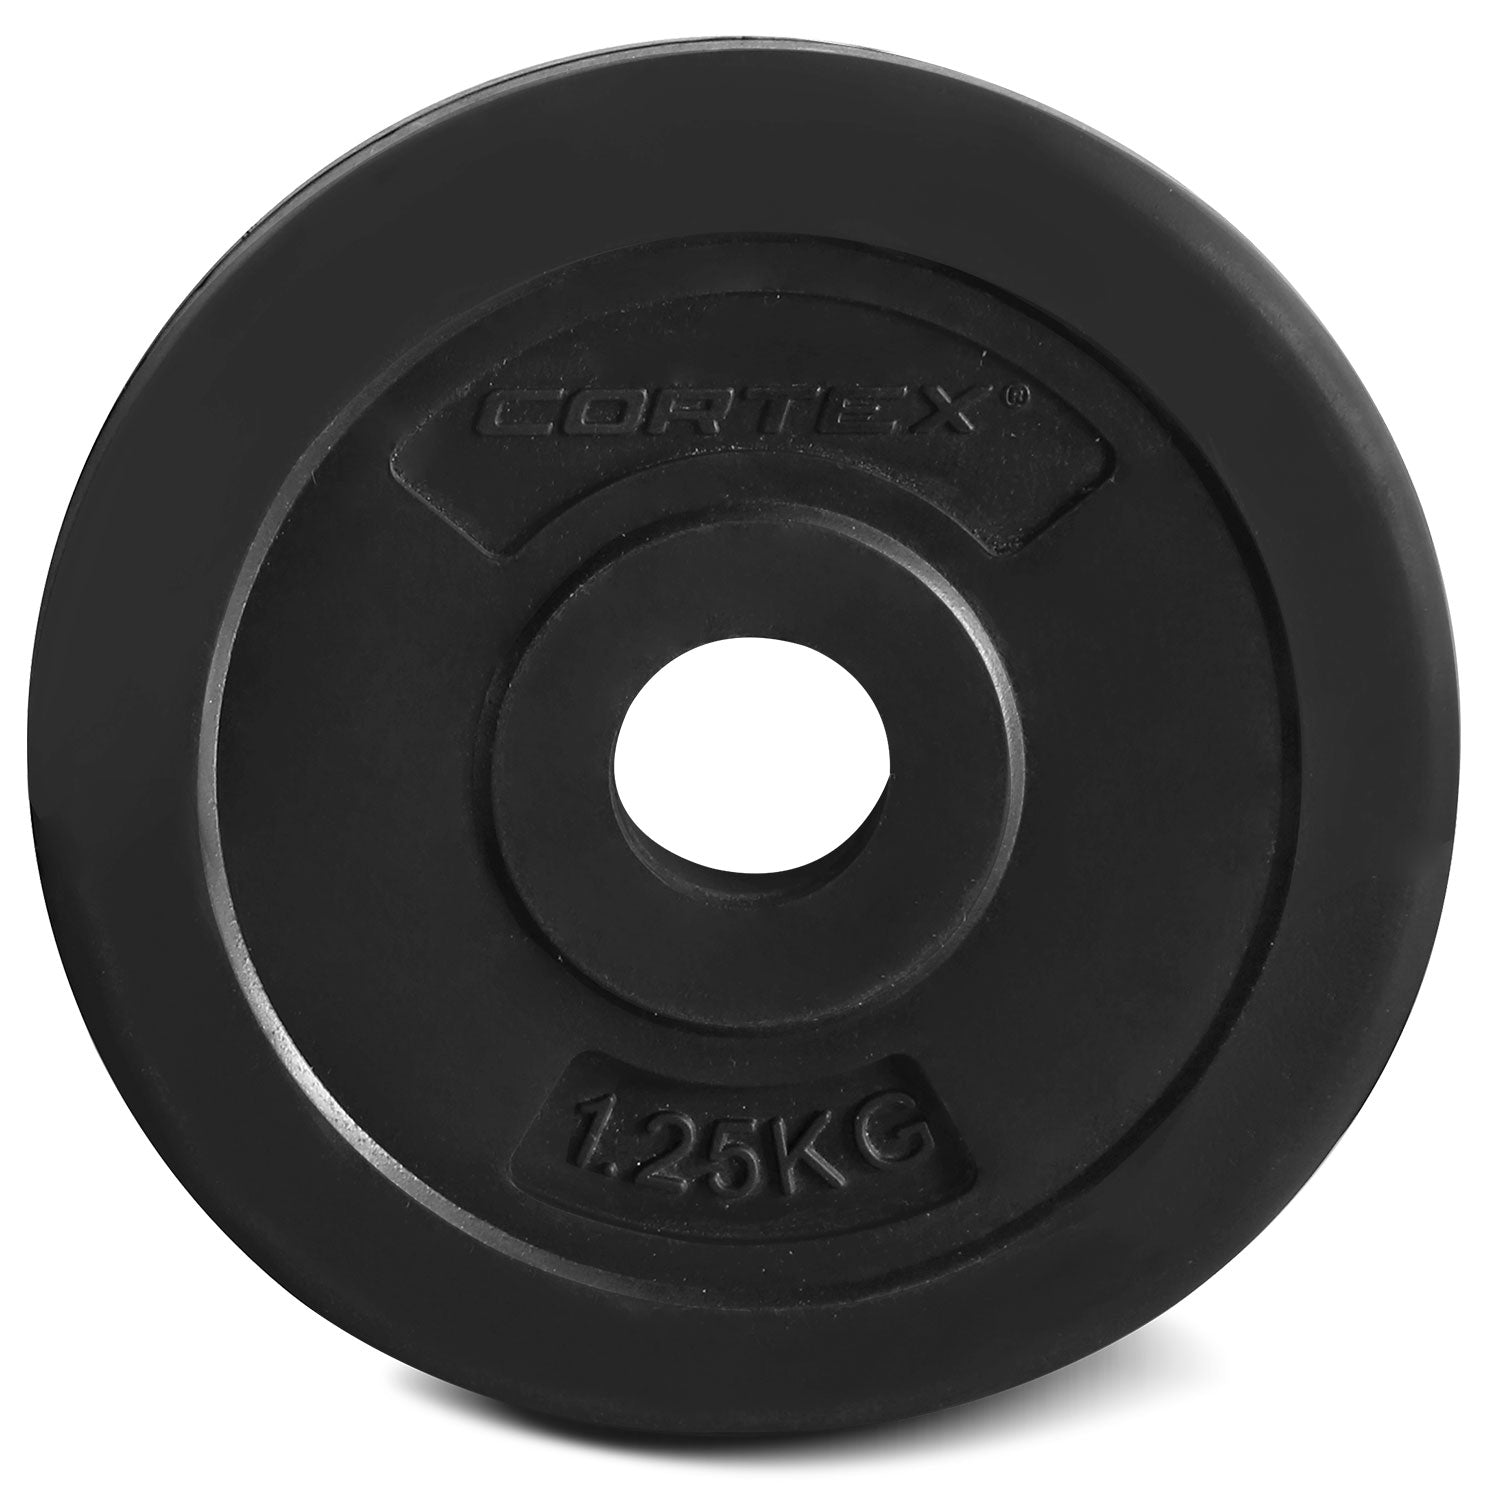 CORTEX 1.25kg EnduraShell Standard Weight Plates 25mm (Set of 4)